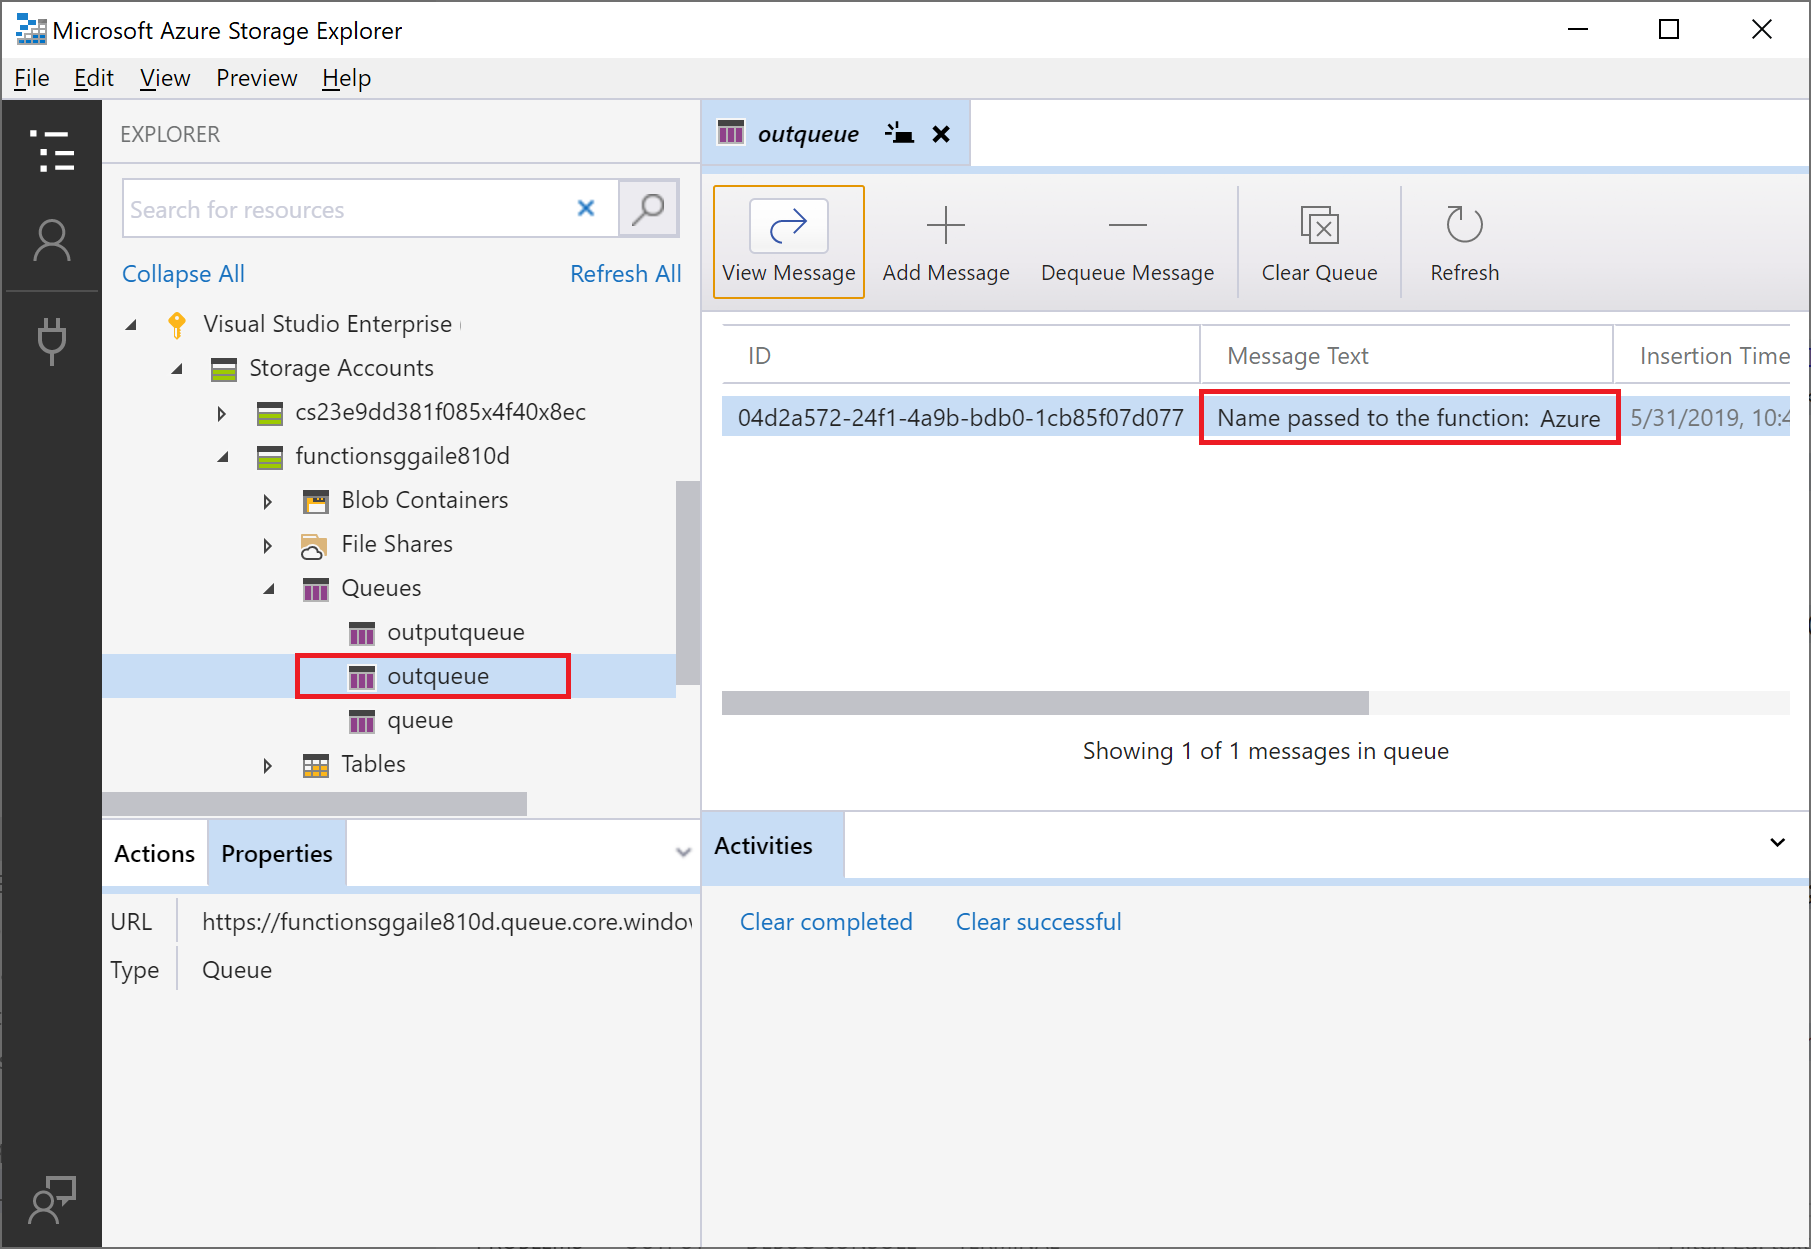 Screenshot of the queue message shown in Azure Storage Explorer.